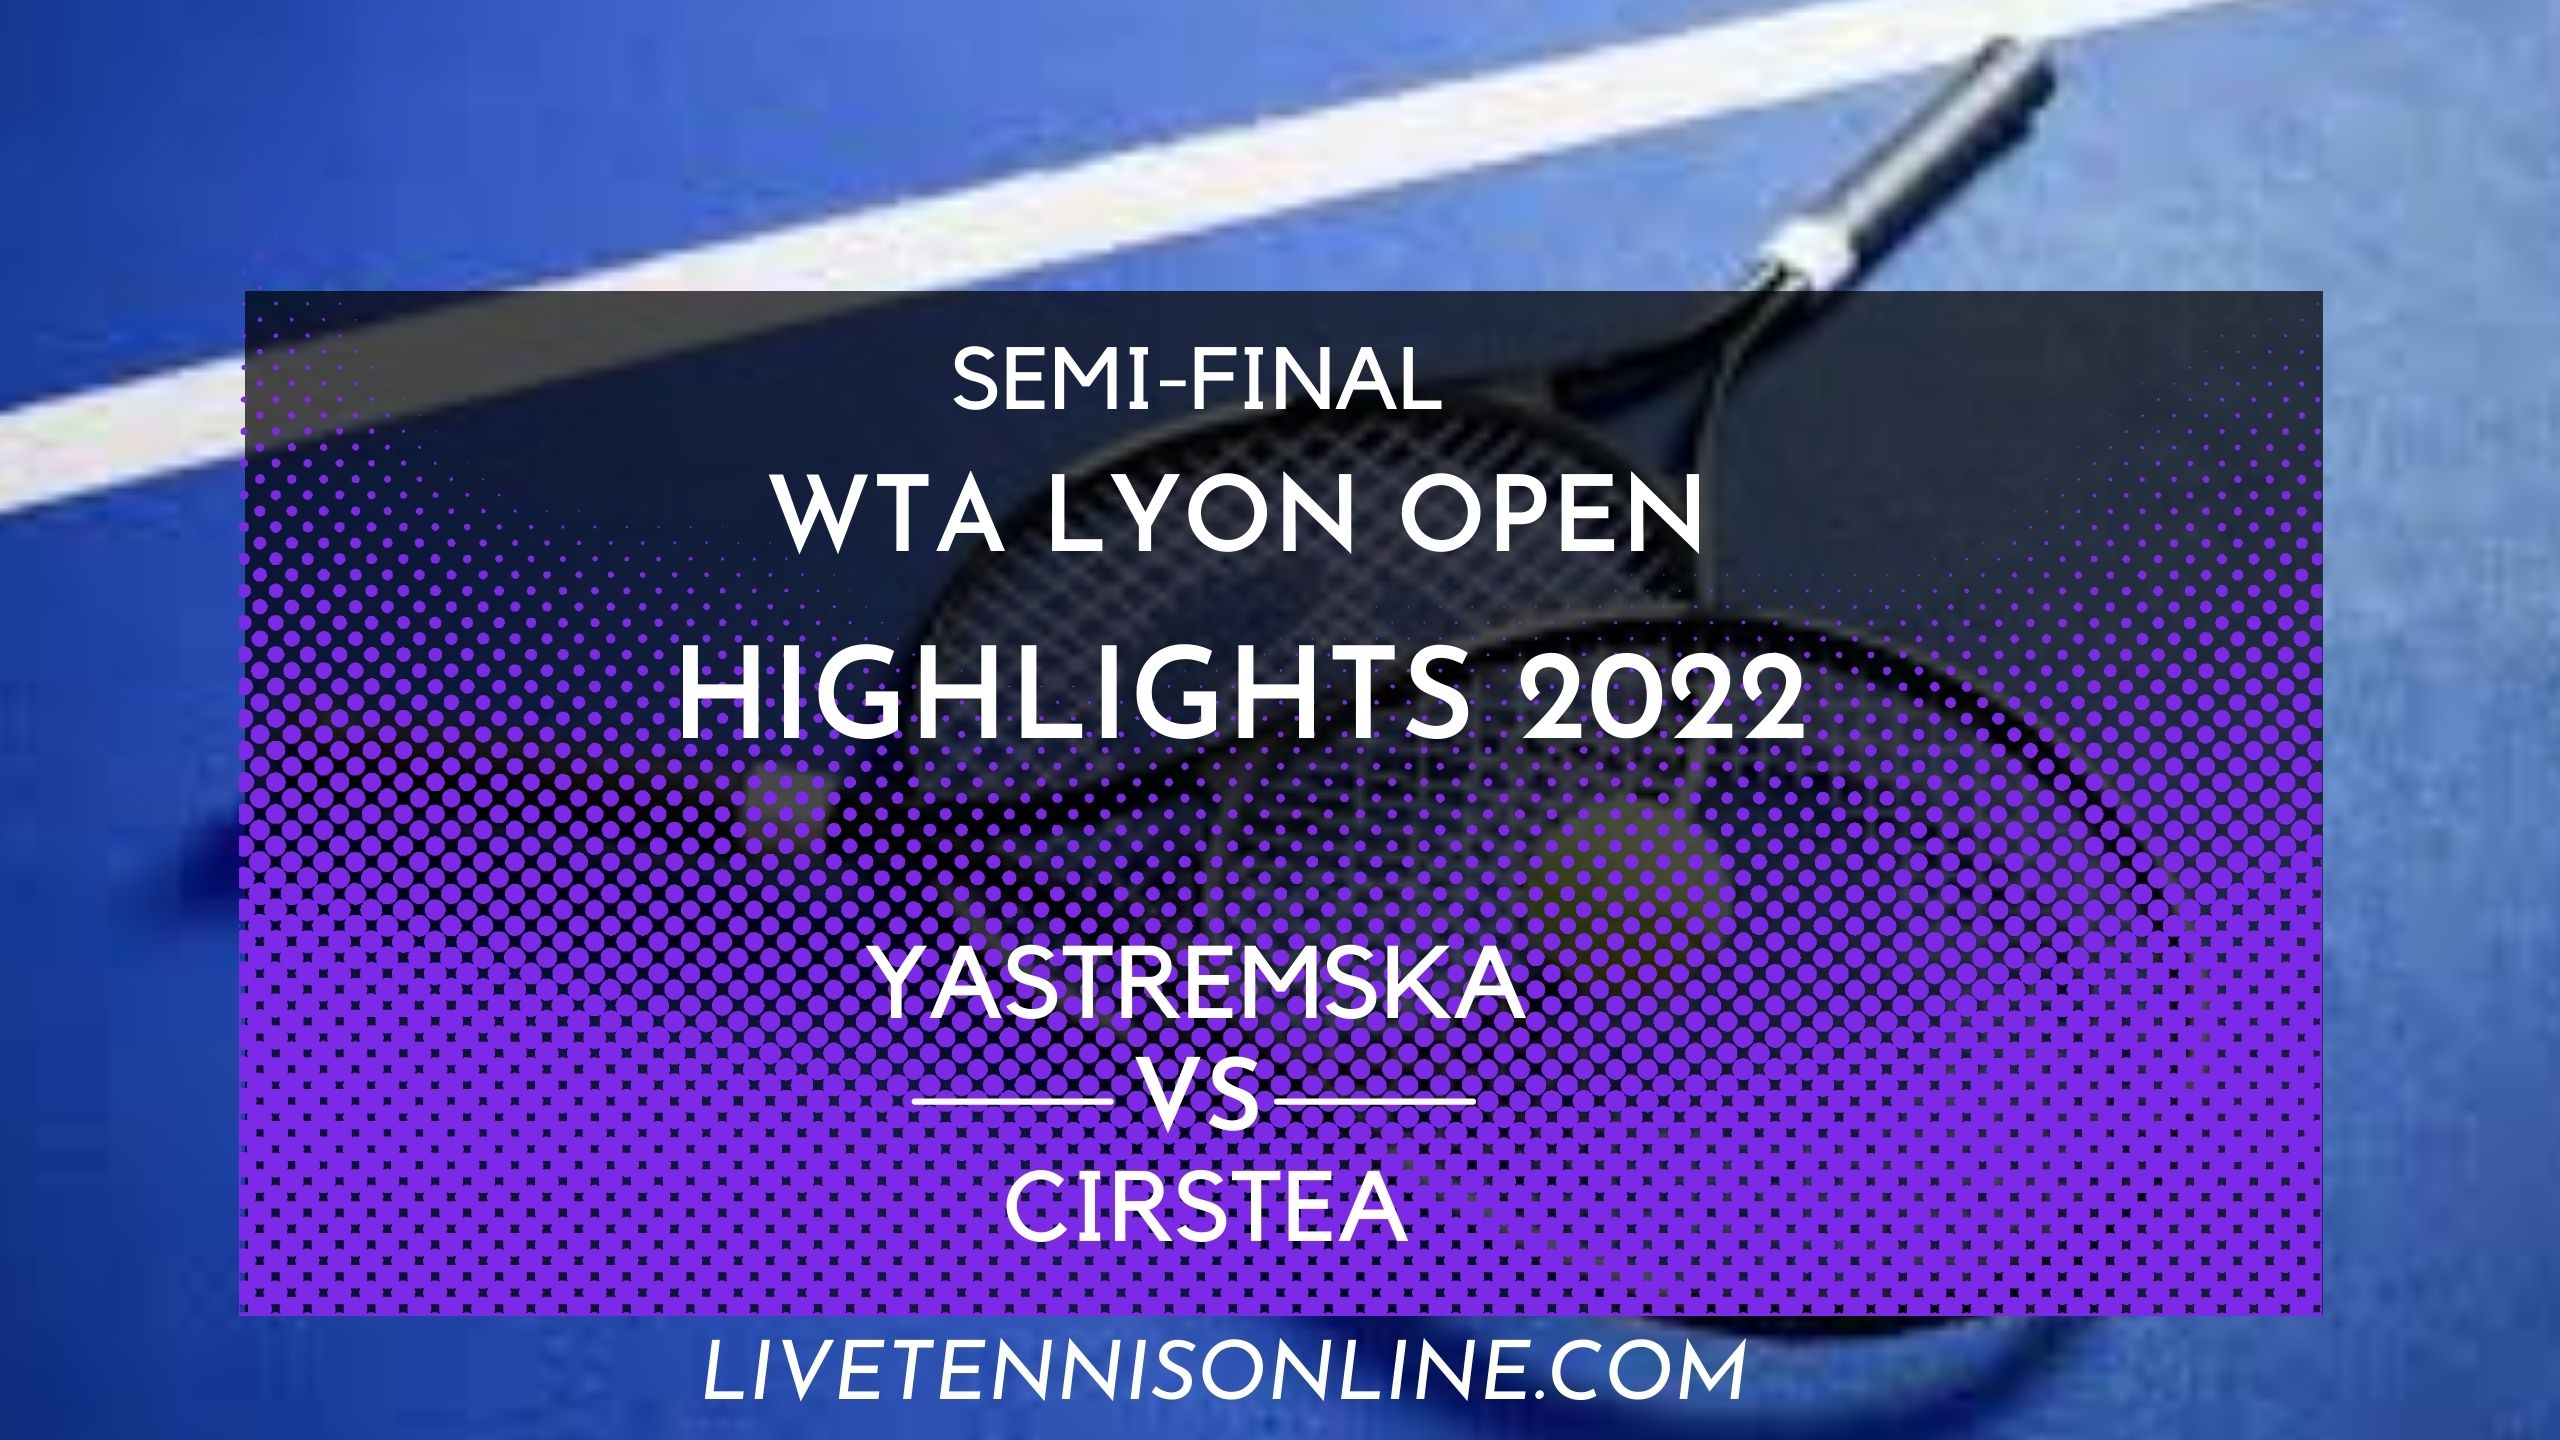 Yastremska Vs Cirstea SF Highlights 2022